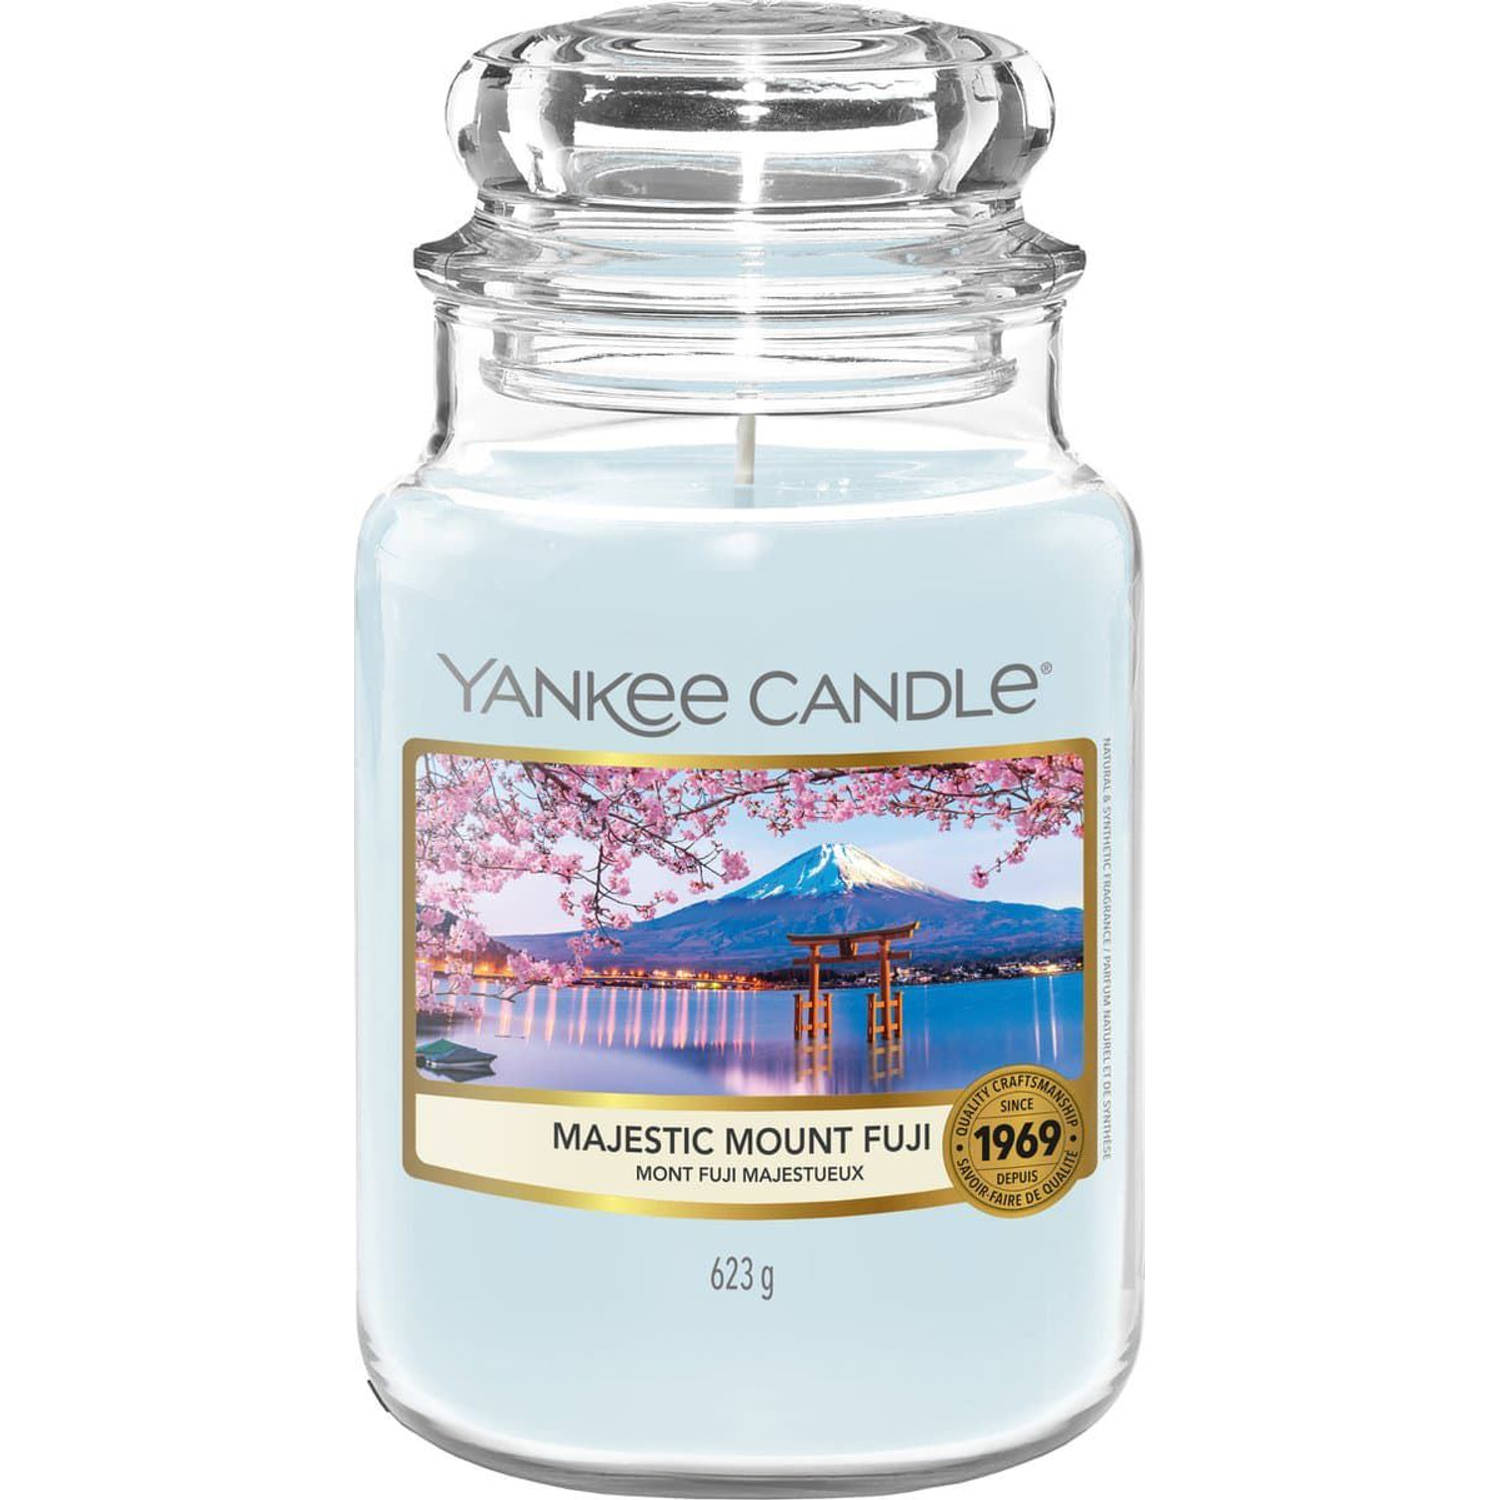 Yankee Candle - Majestic Mount Fuji geurkaars - Large Jar - Tot 150 branduren